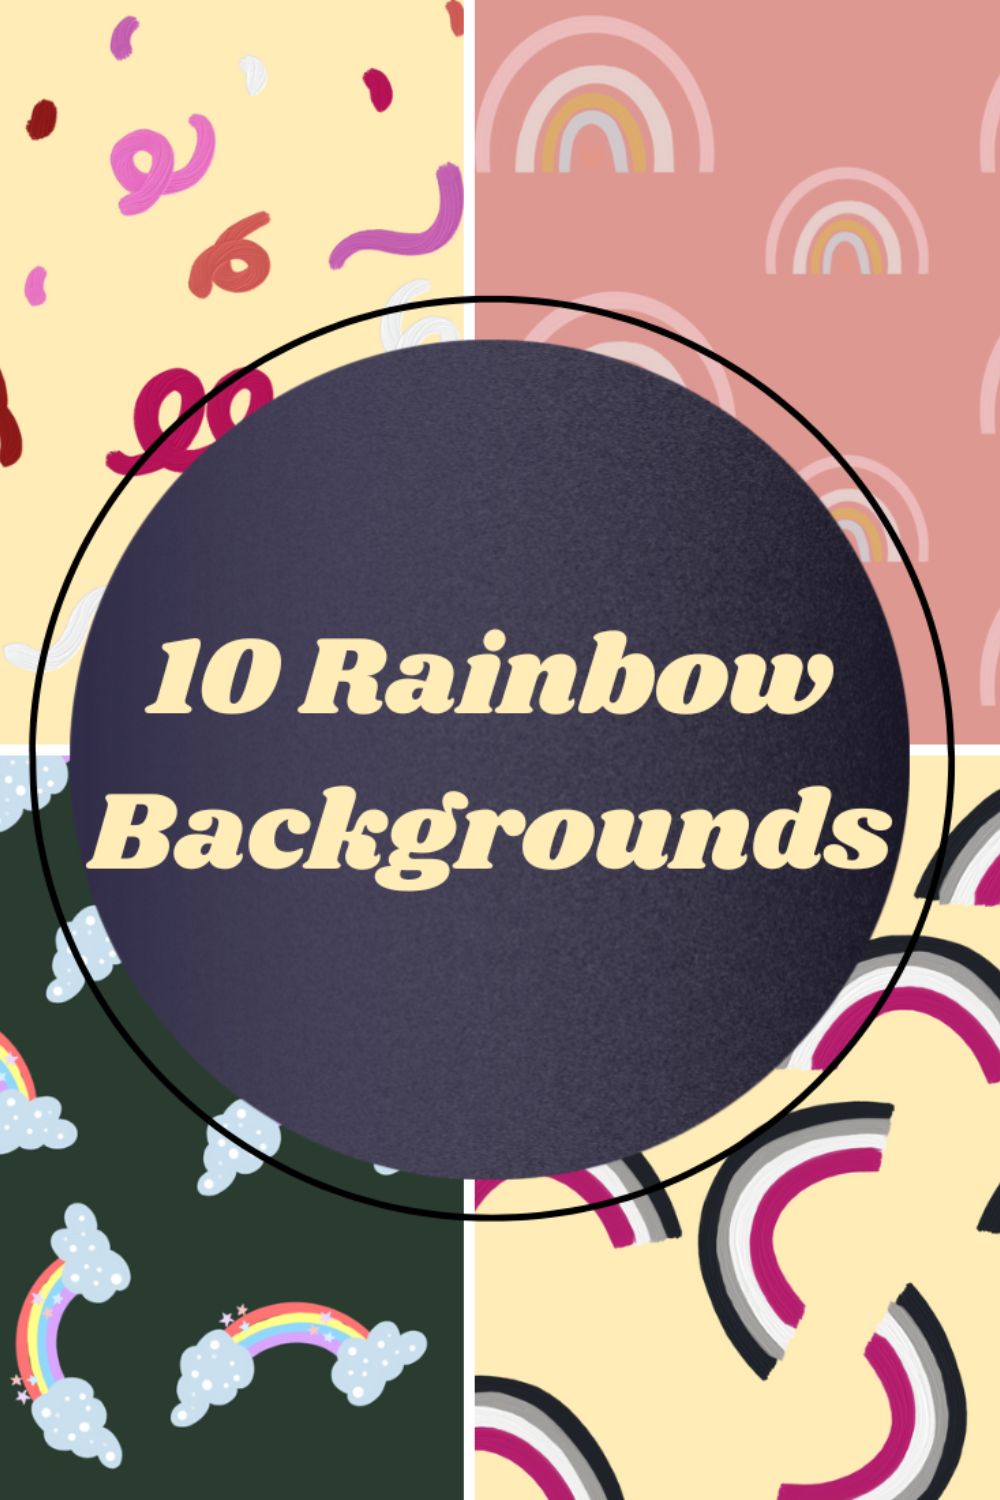 Rainbow Backgrounds Design Graphics pinterest image.